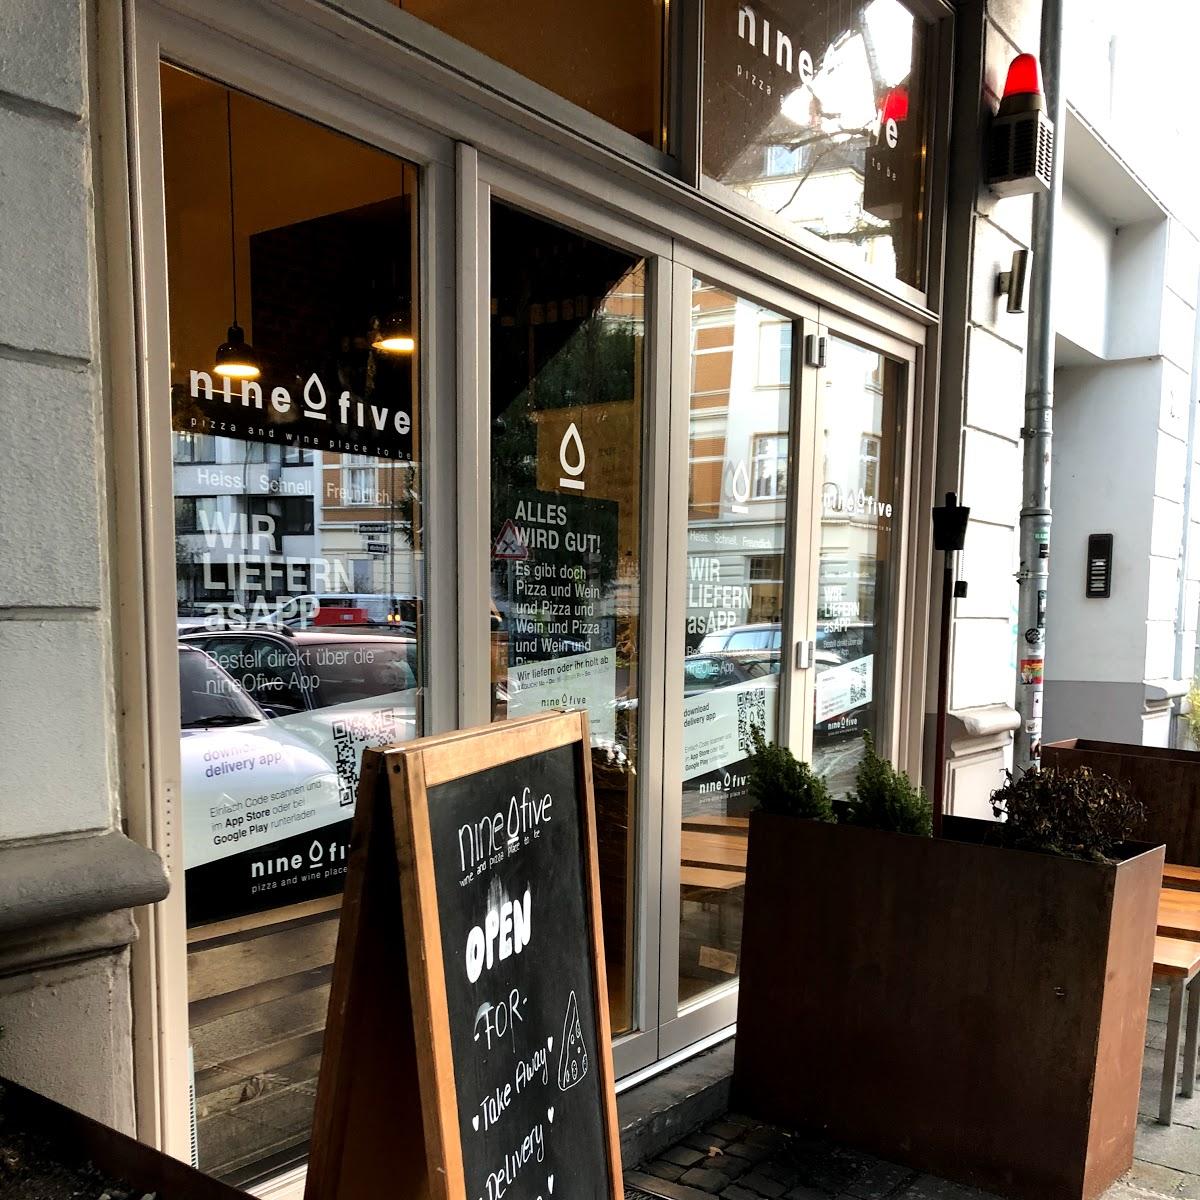 Restaurant "nineOfive Pizza and Wine Place" in Düsseldorf